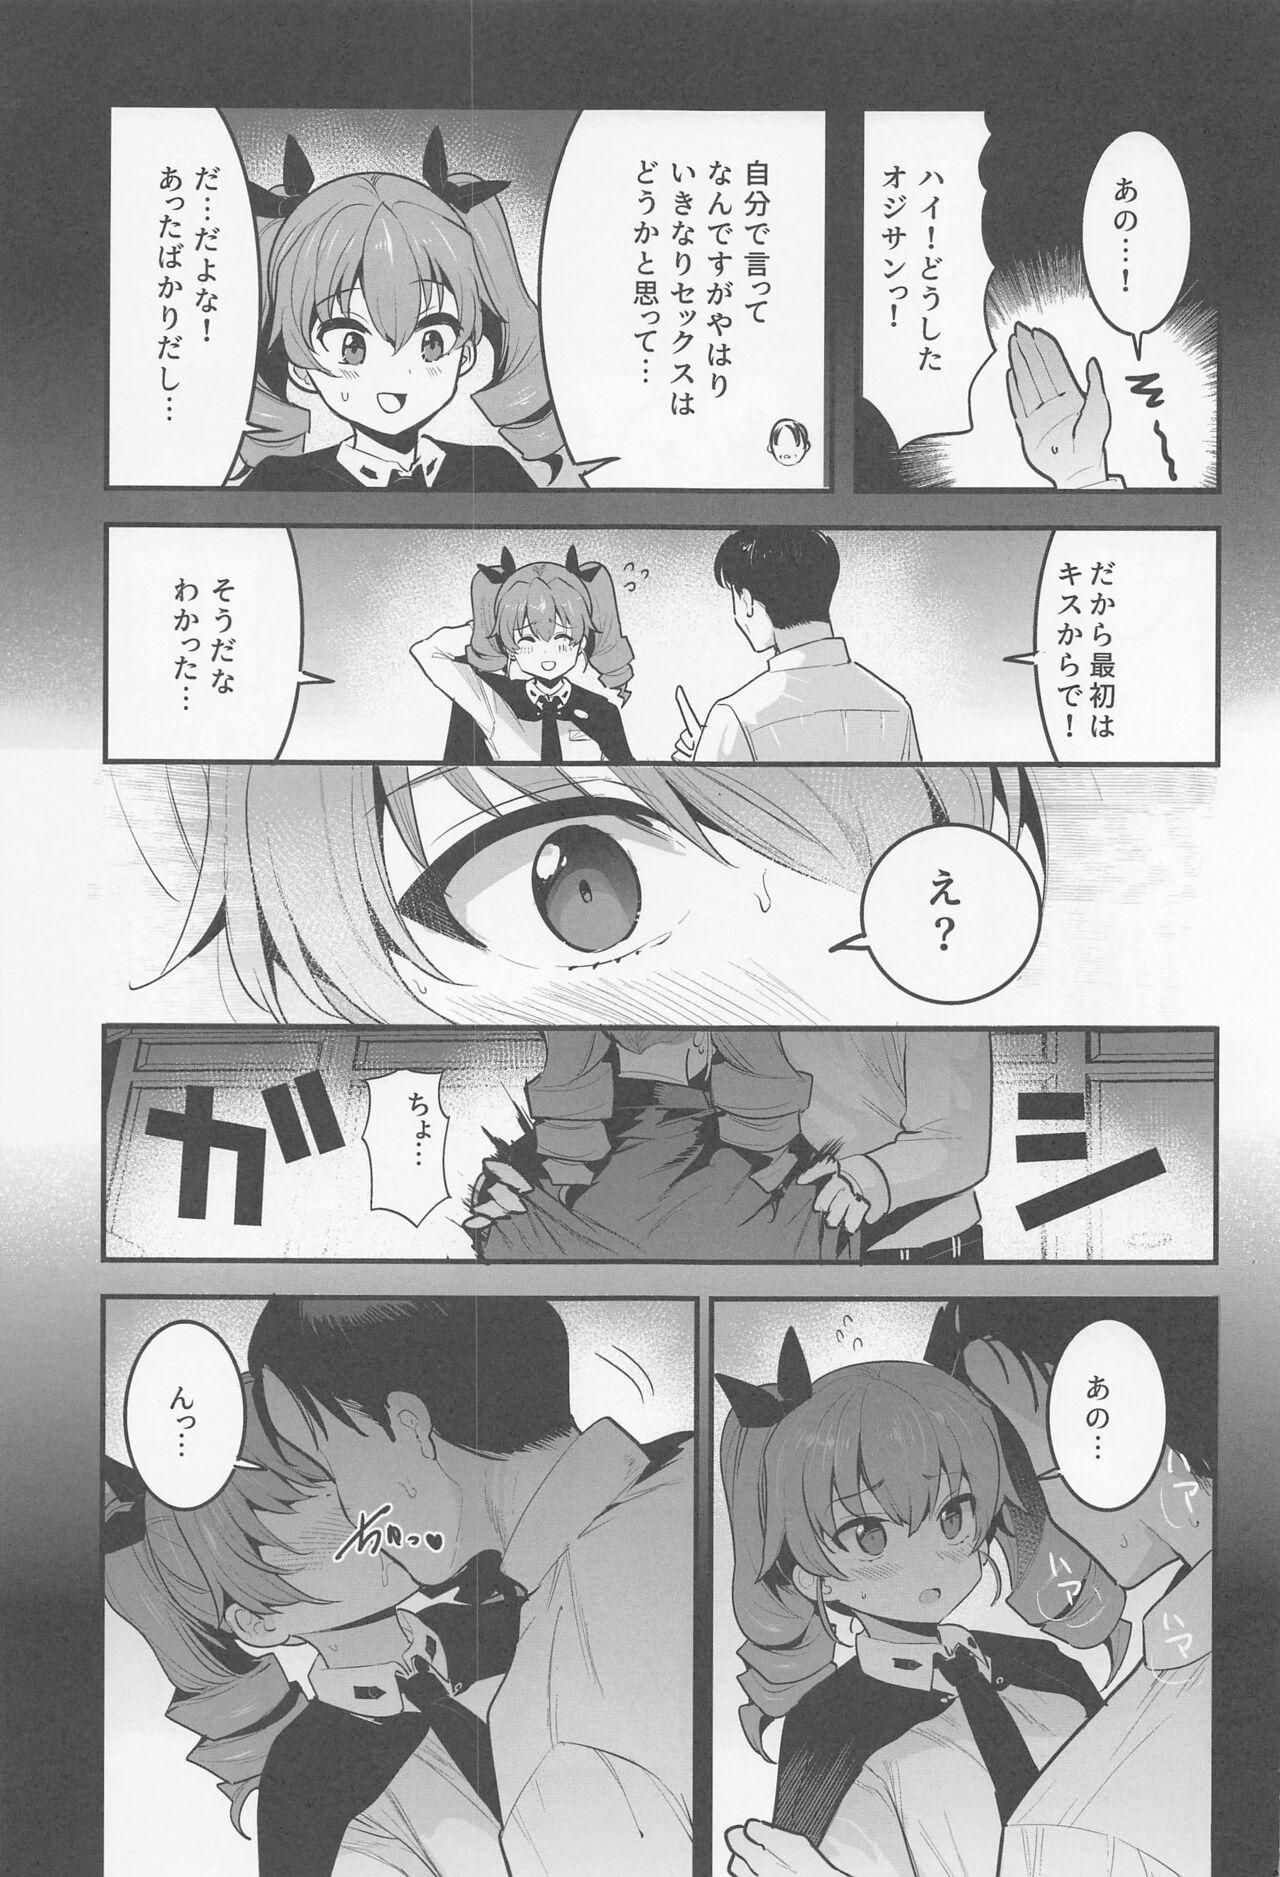 Play anchobi dogezadeonegaishitaraippatsuyarasetekuremashita - Girls und panzer Soft - Page 4